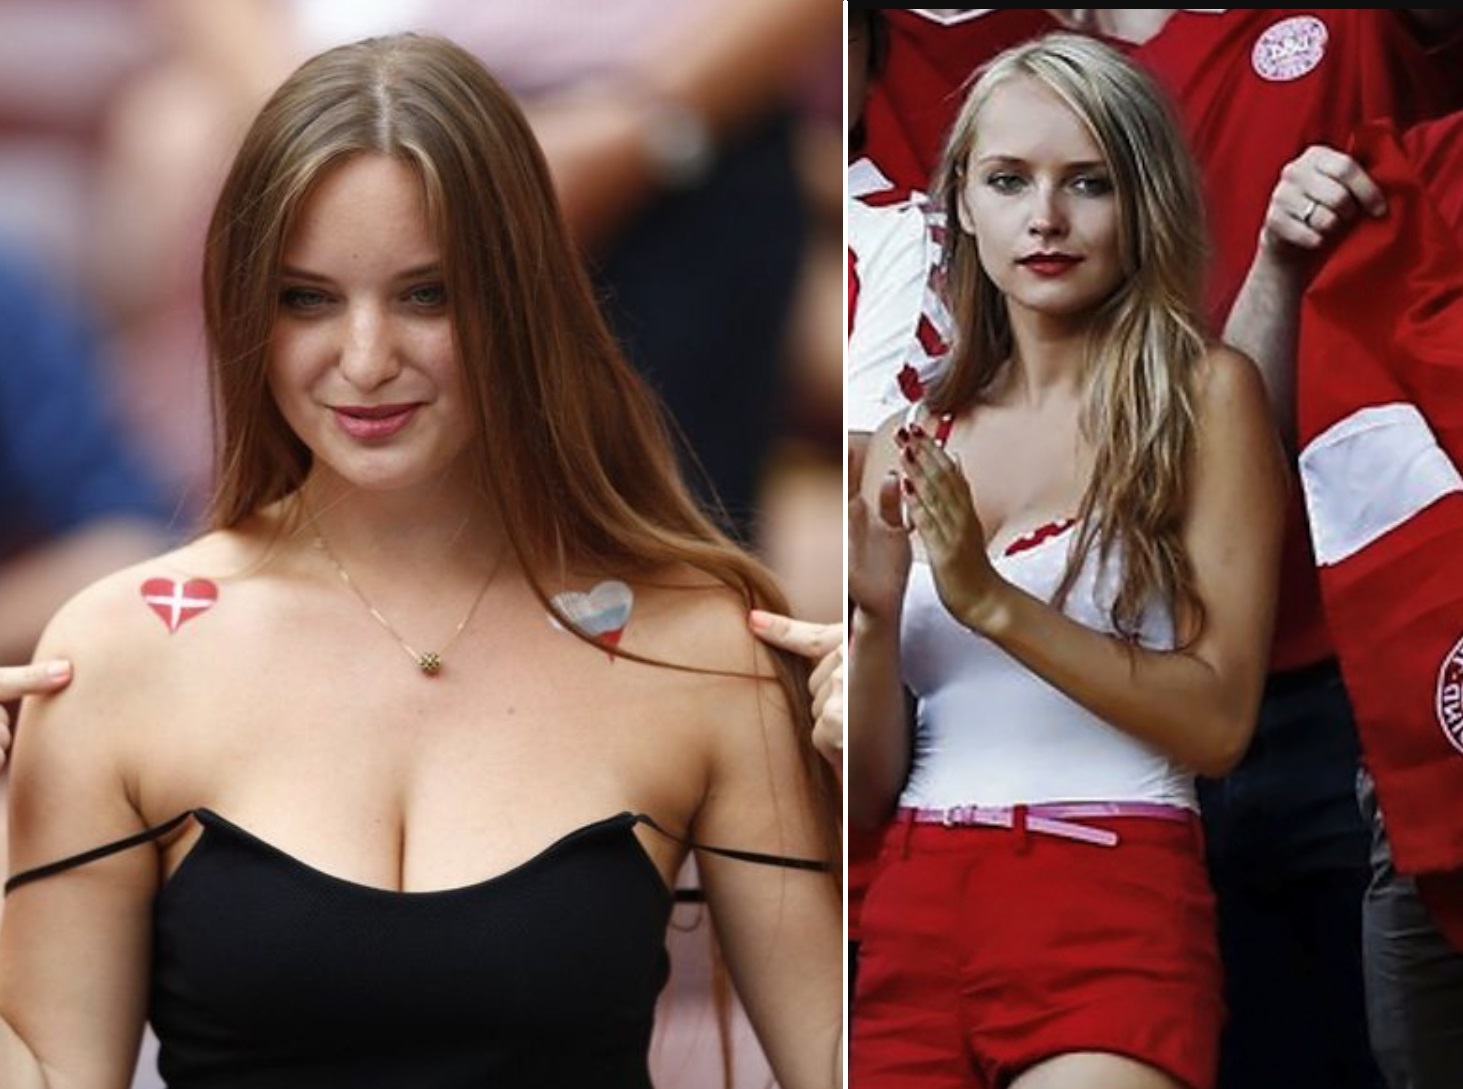 Denmark Female Football Fans hottest fans